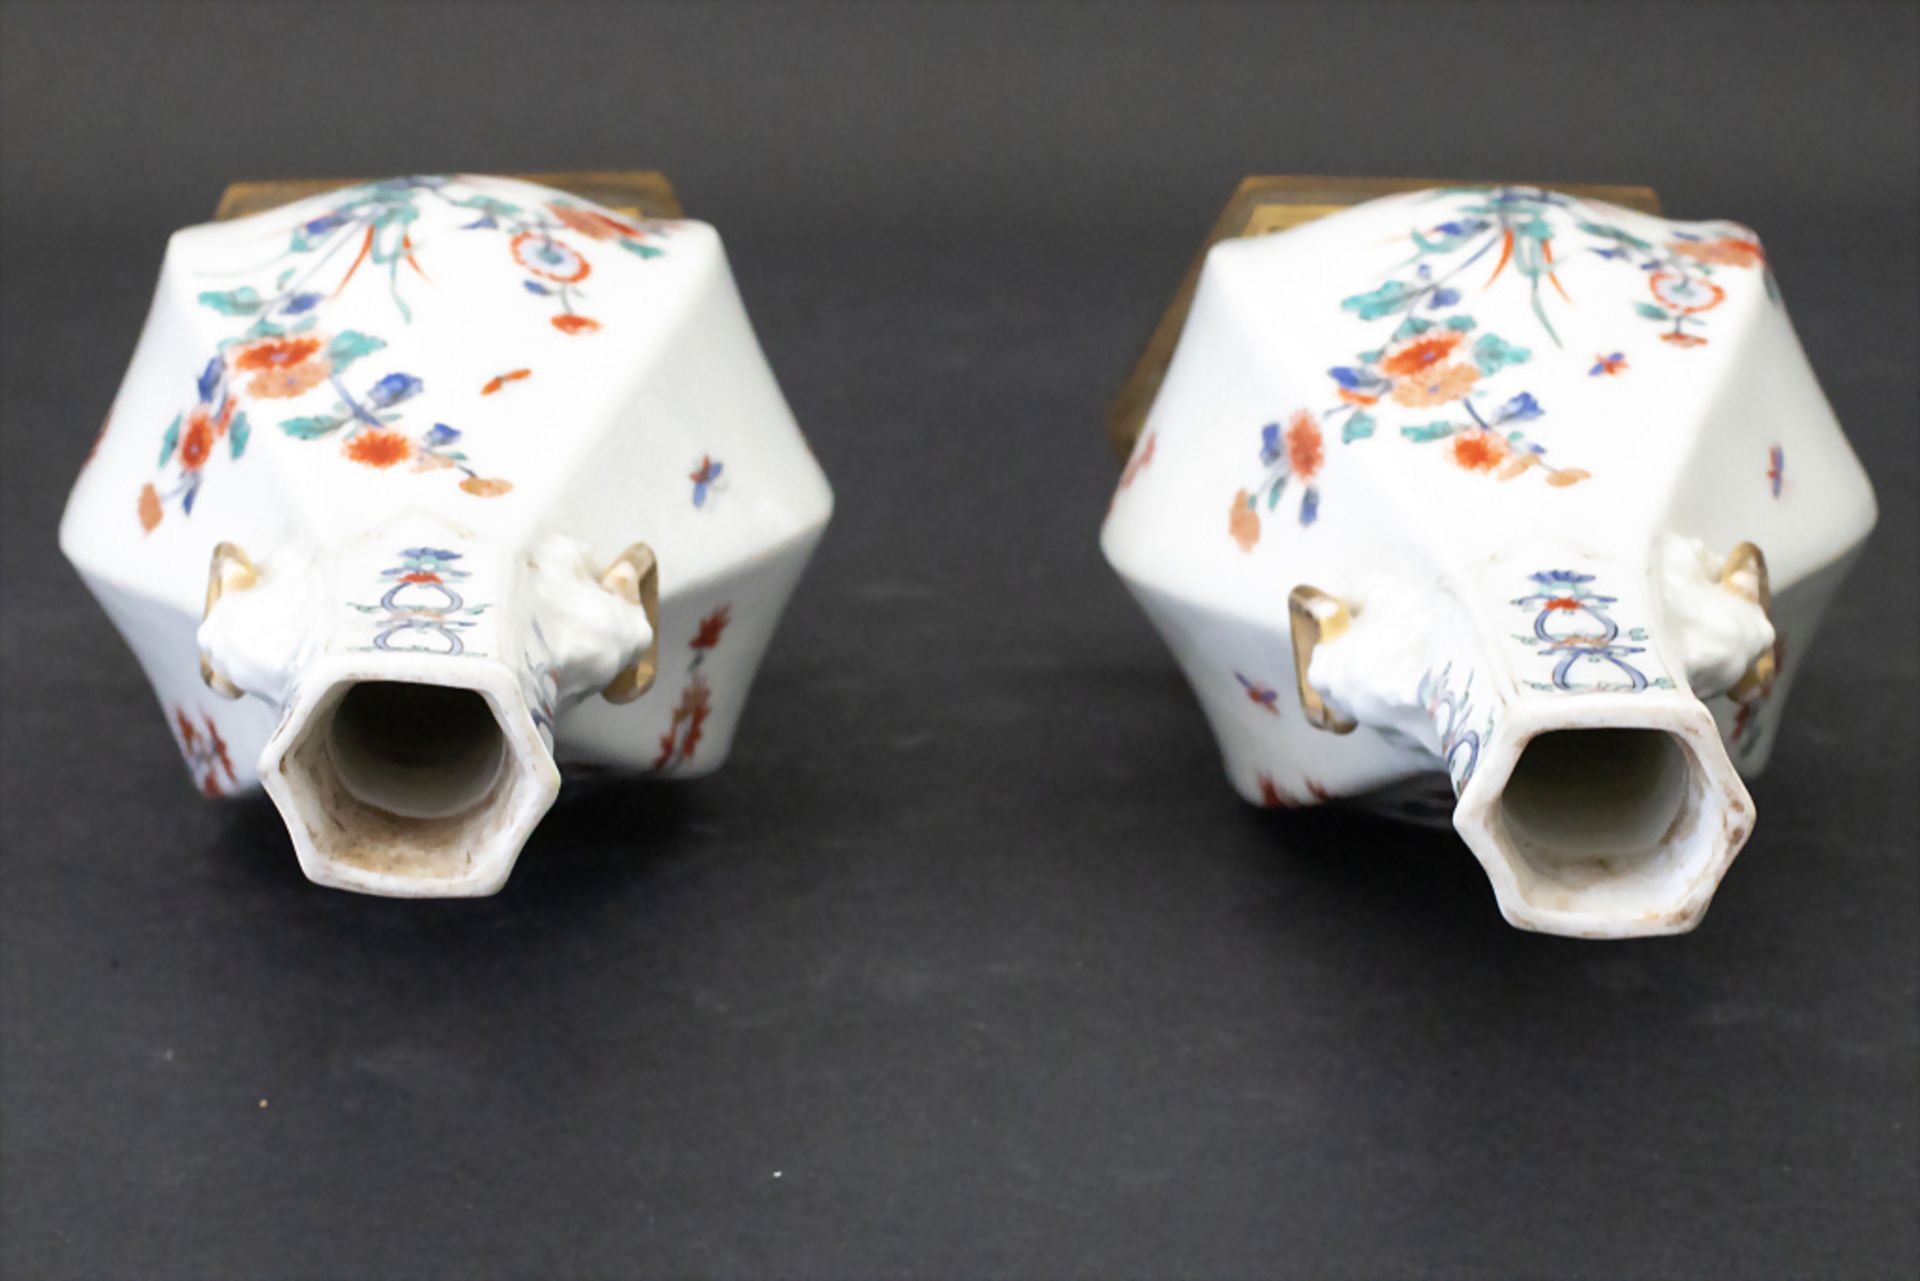 Kakiemon Deckelvasen-Paar / A pair of Kakiemon lidded vases, wohl Meissen oder Chantilly, 18. Jh. - Image 11 of 12